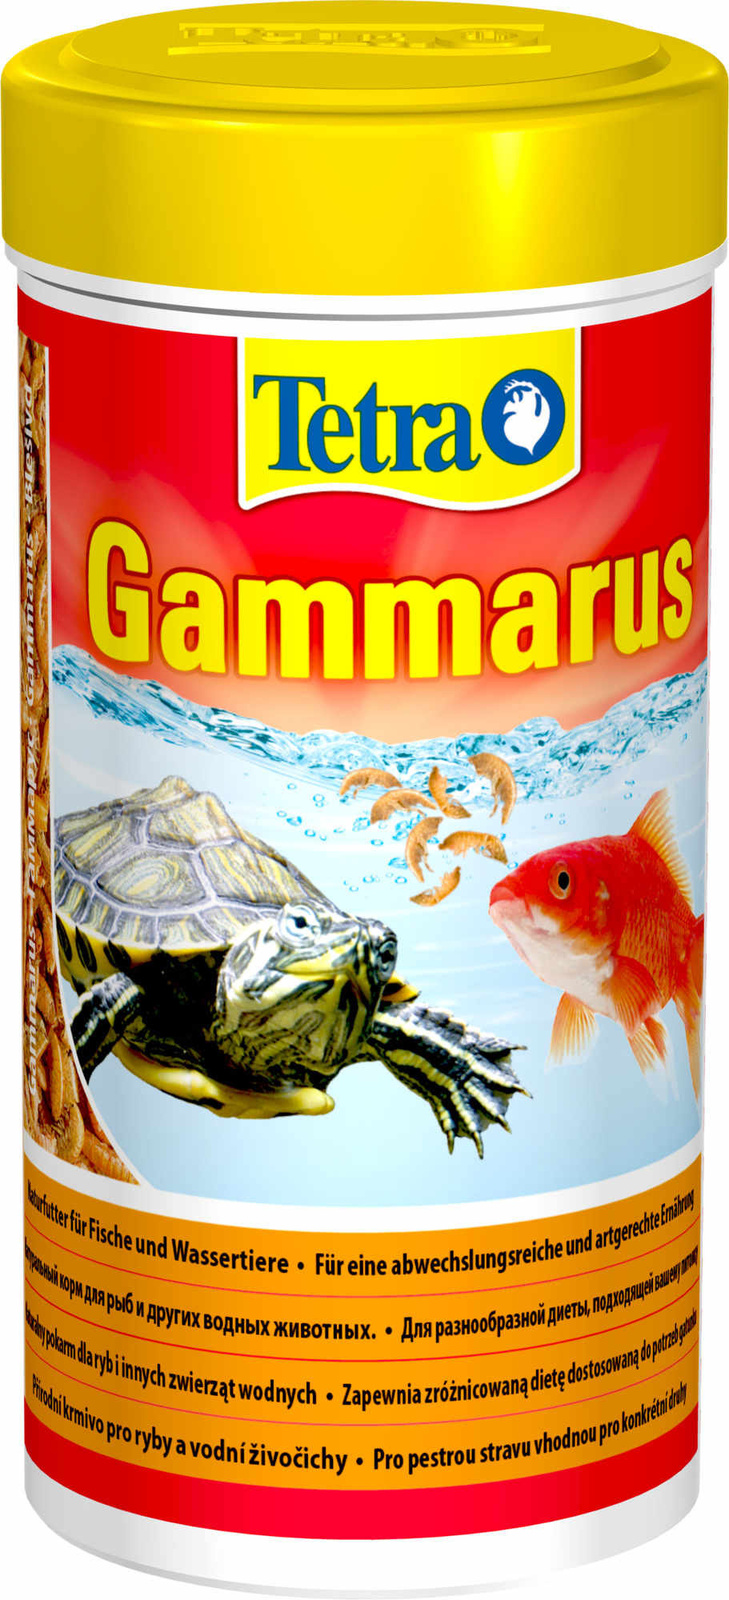 cliffi италия для черепах средние сушеные креветки 100мл gammarus pcaa301 gammarus 0 009 кг 40401 3 шт Tetra (корма) Tetra (корма) корм для водных черепах, гаммарус (25 г)